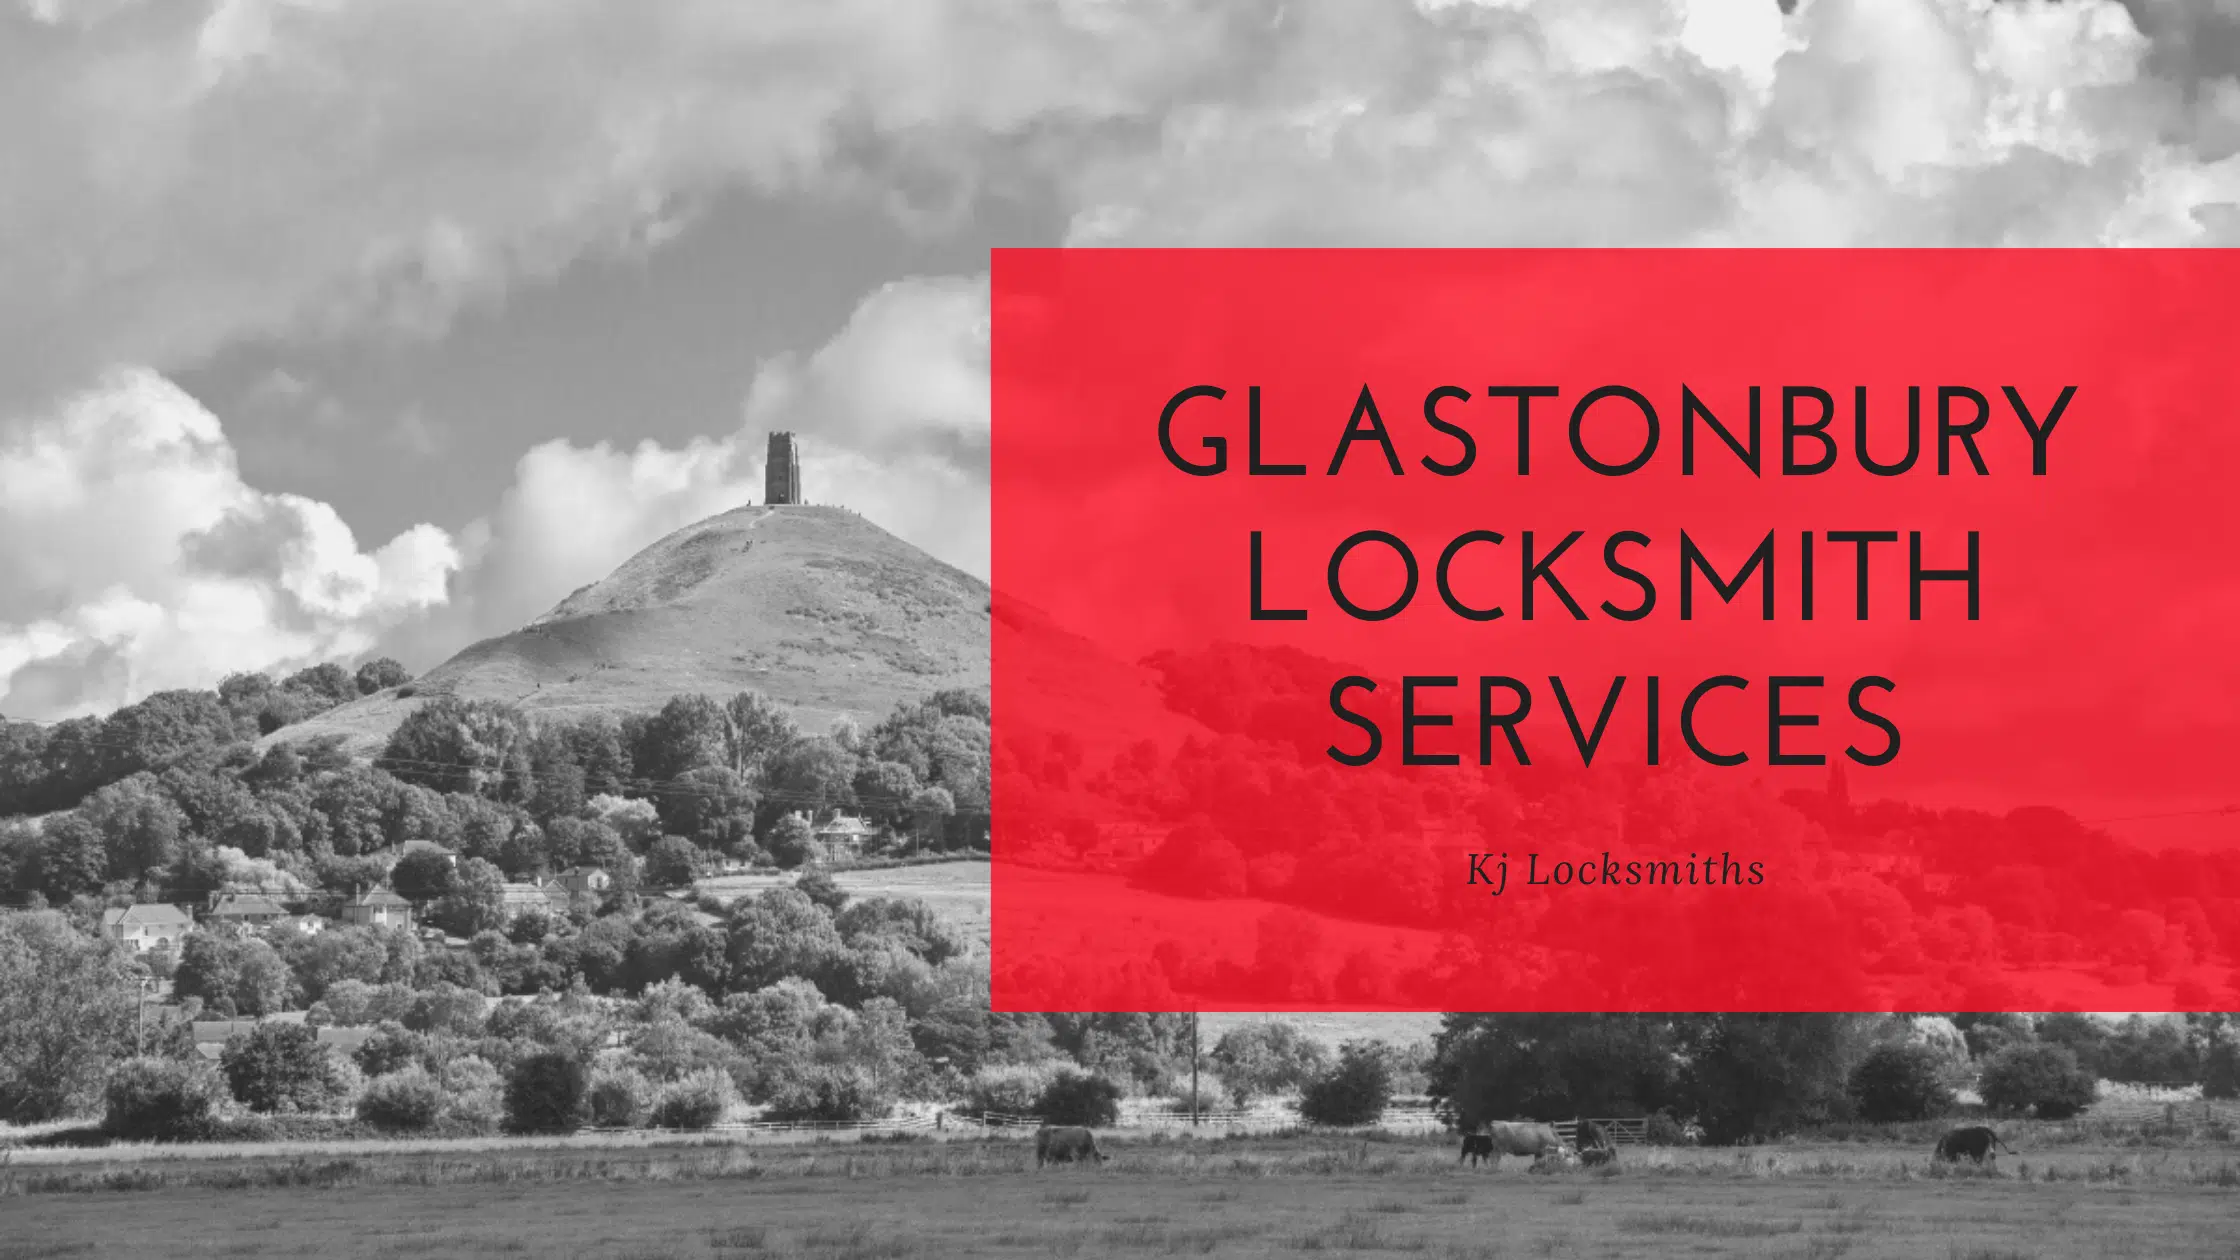 Glastonbury Locksmith Services